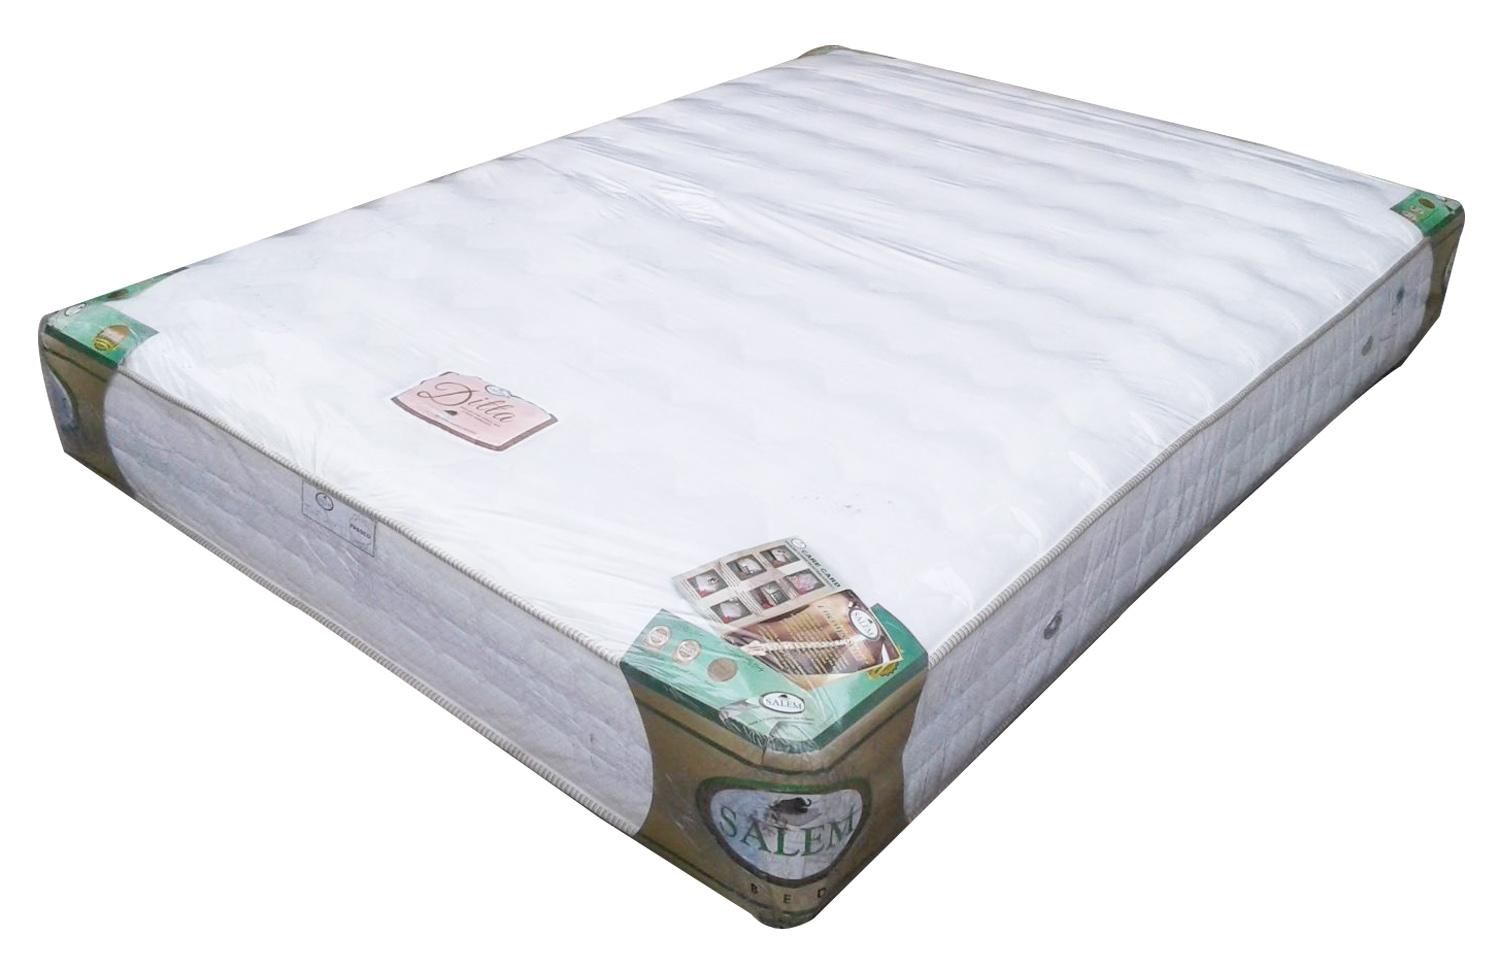 salem bed spring mattress review